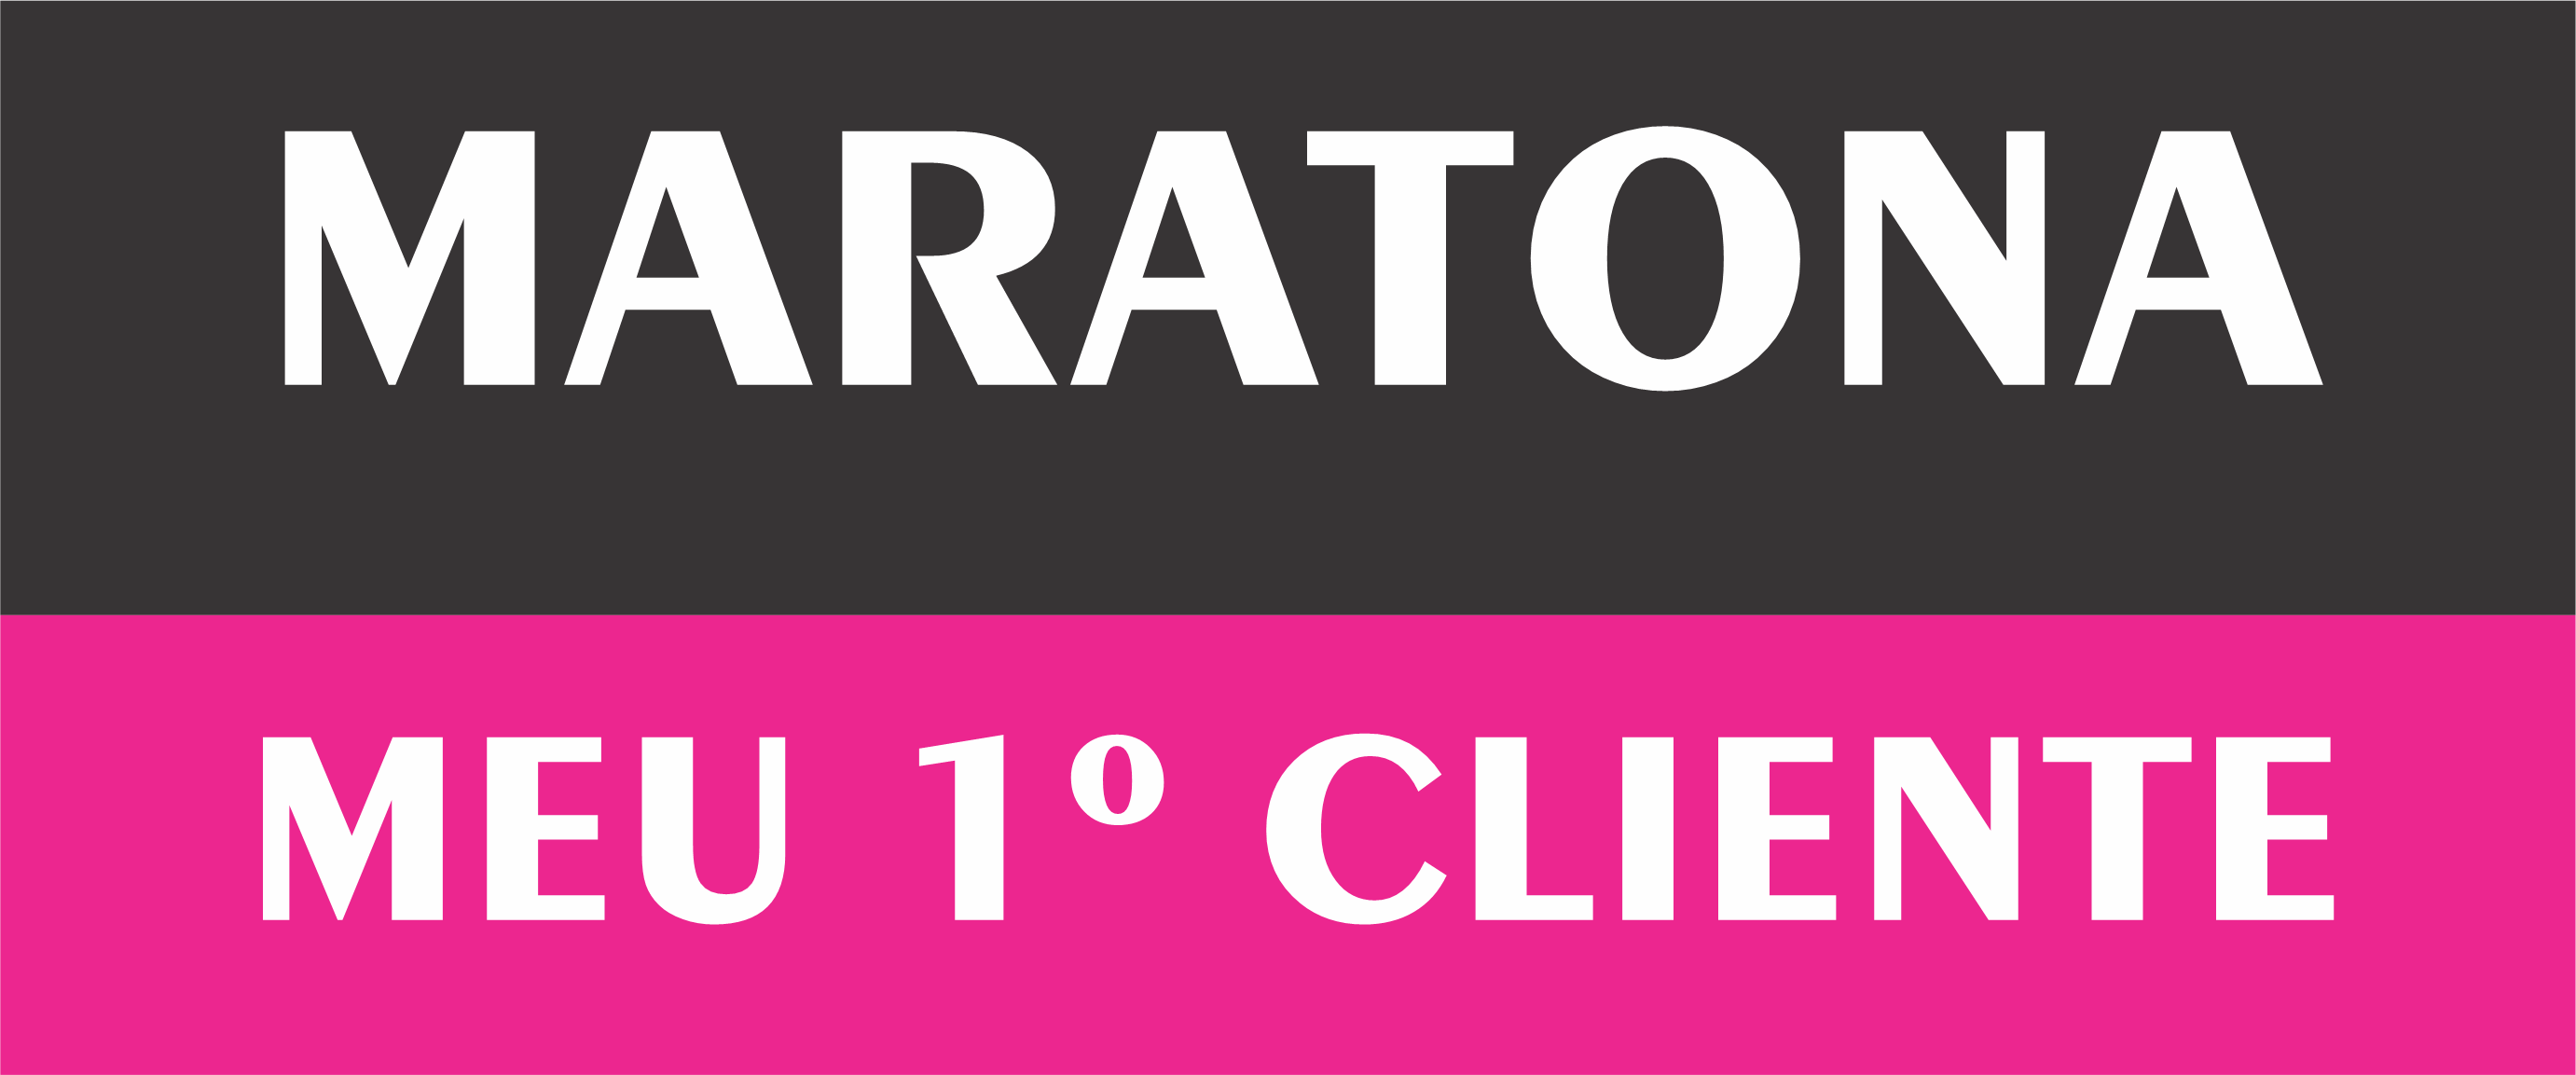 maratona3 - Maratona Meu 1 Cliente